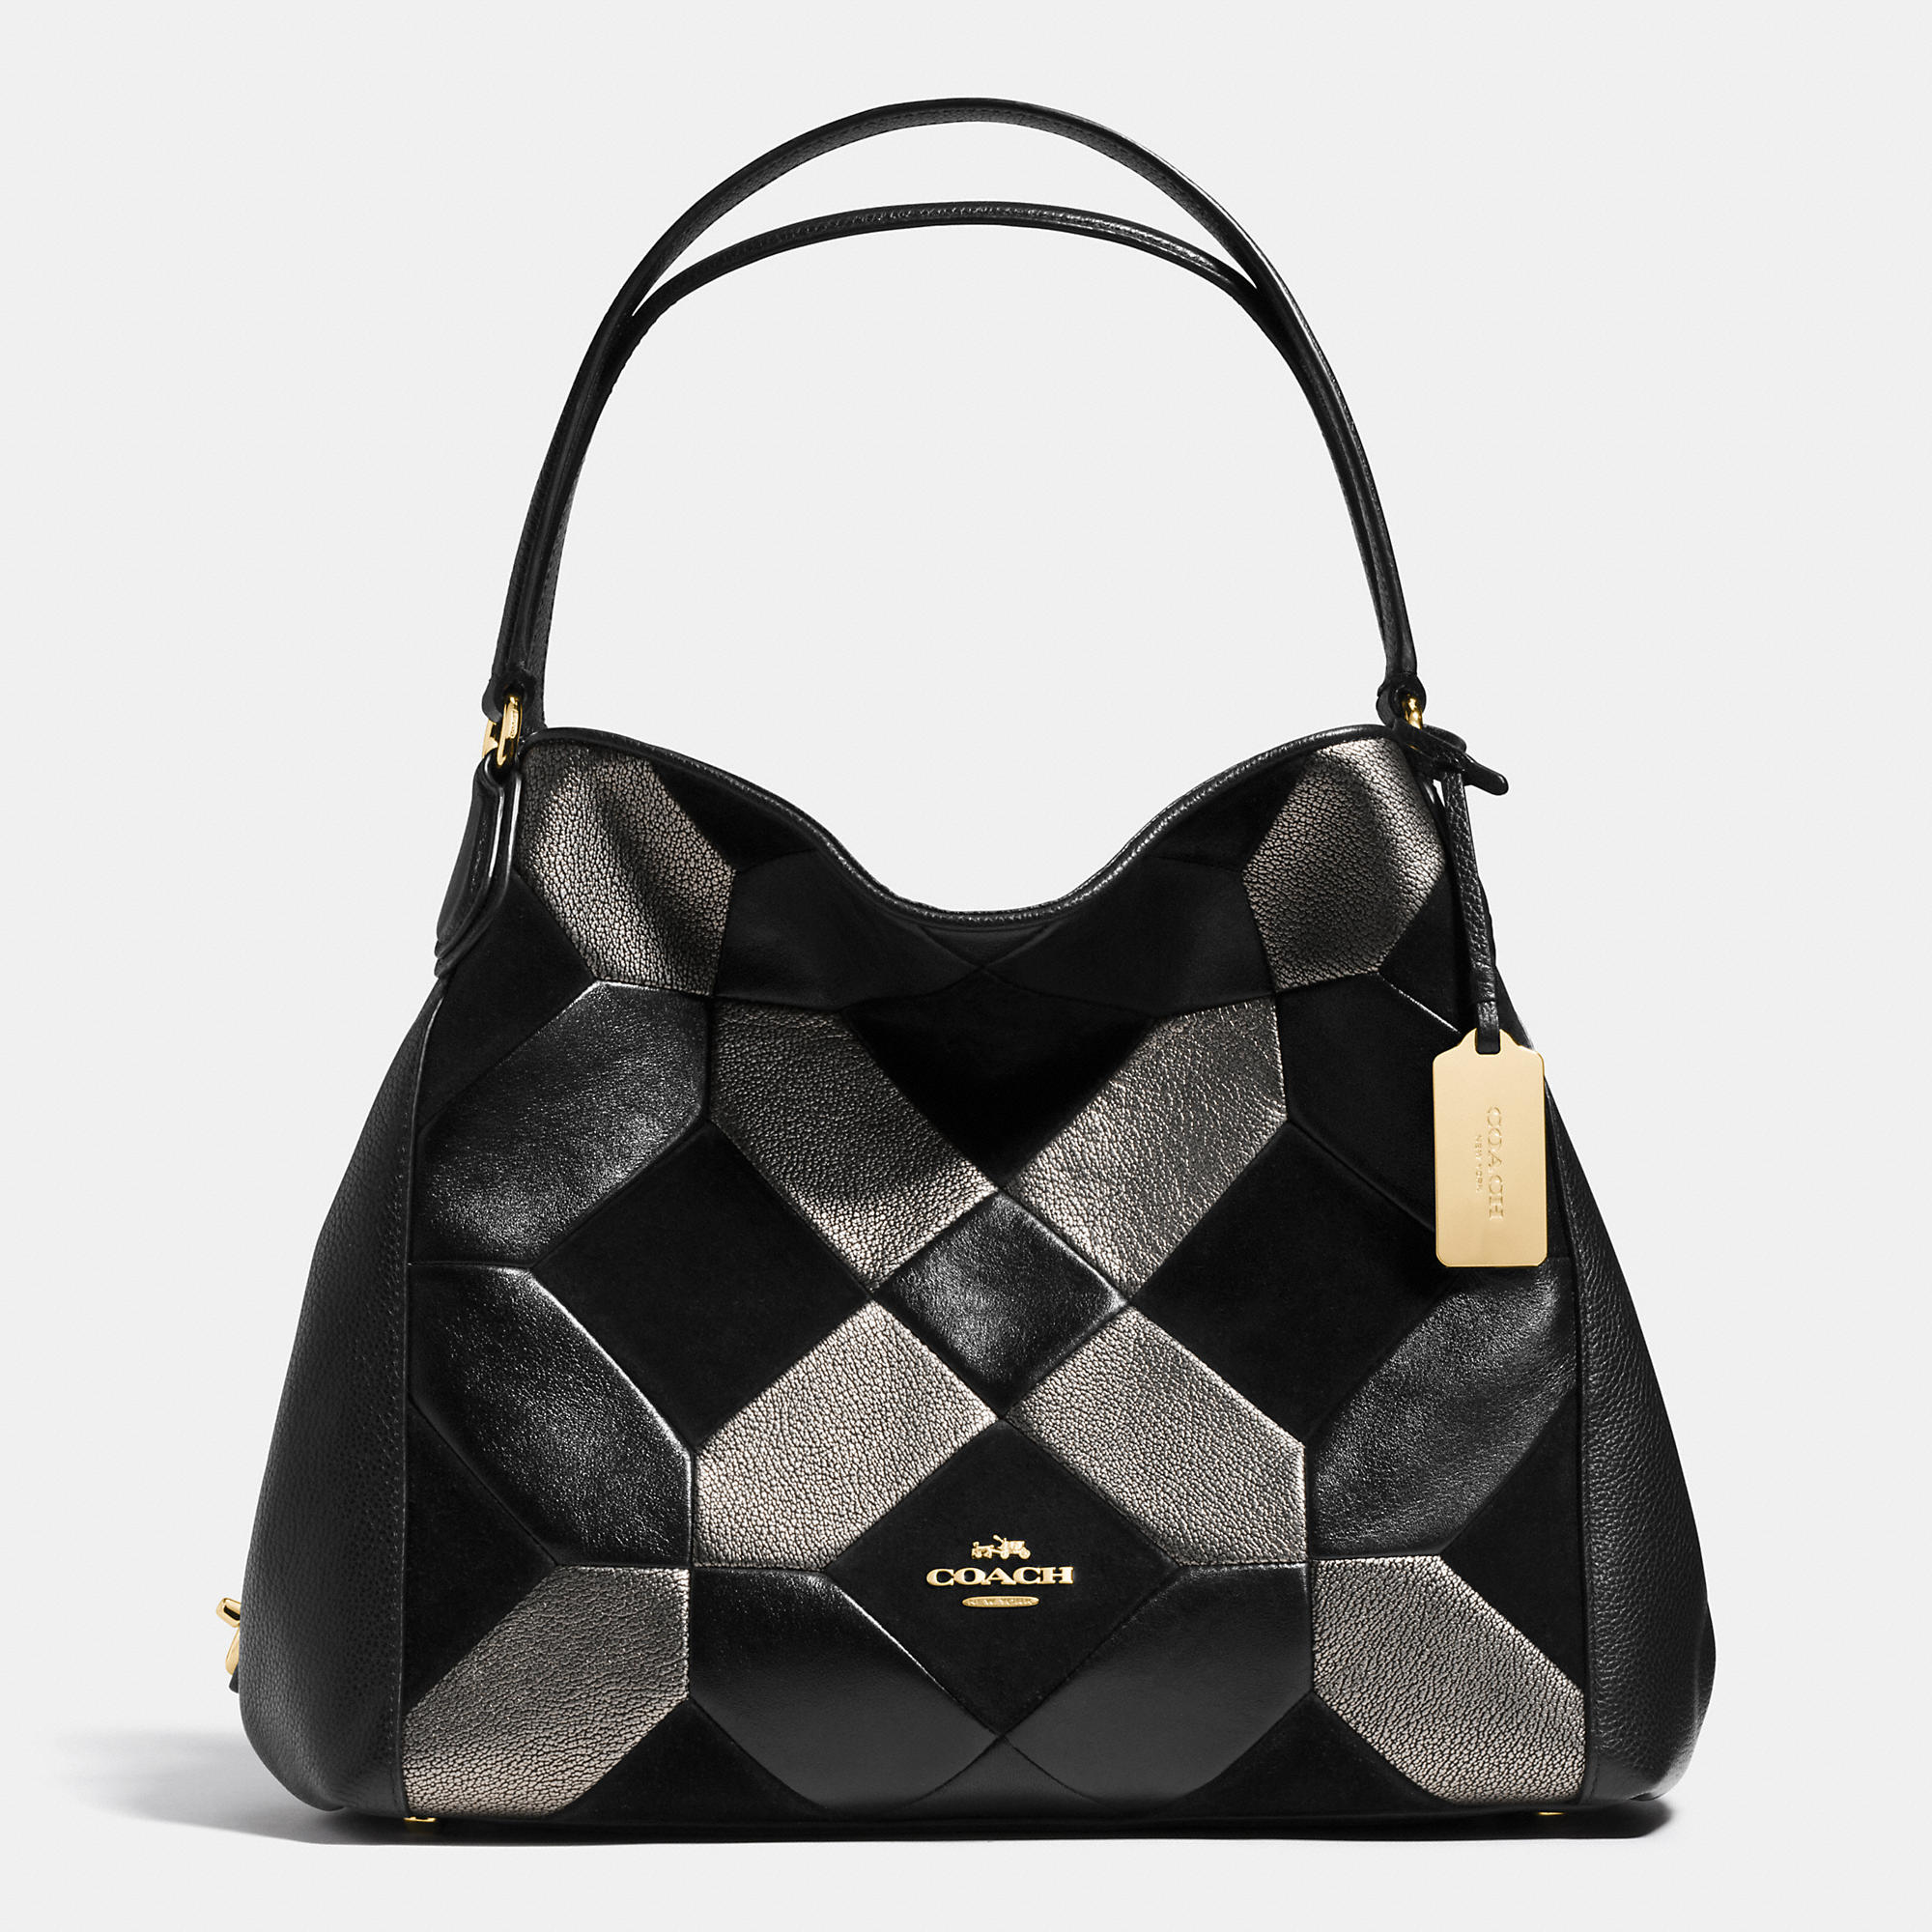 COACH Edie Shoulder Bag 31 In Patchwork Leather in Light Gold/Black (Black) - Lyst